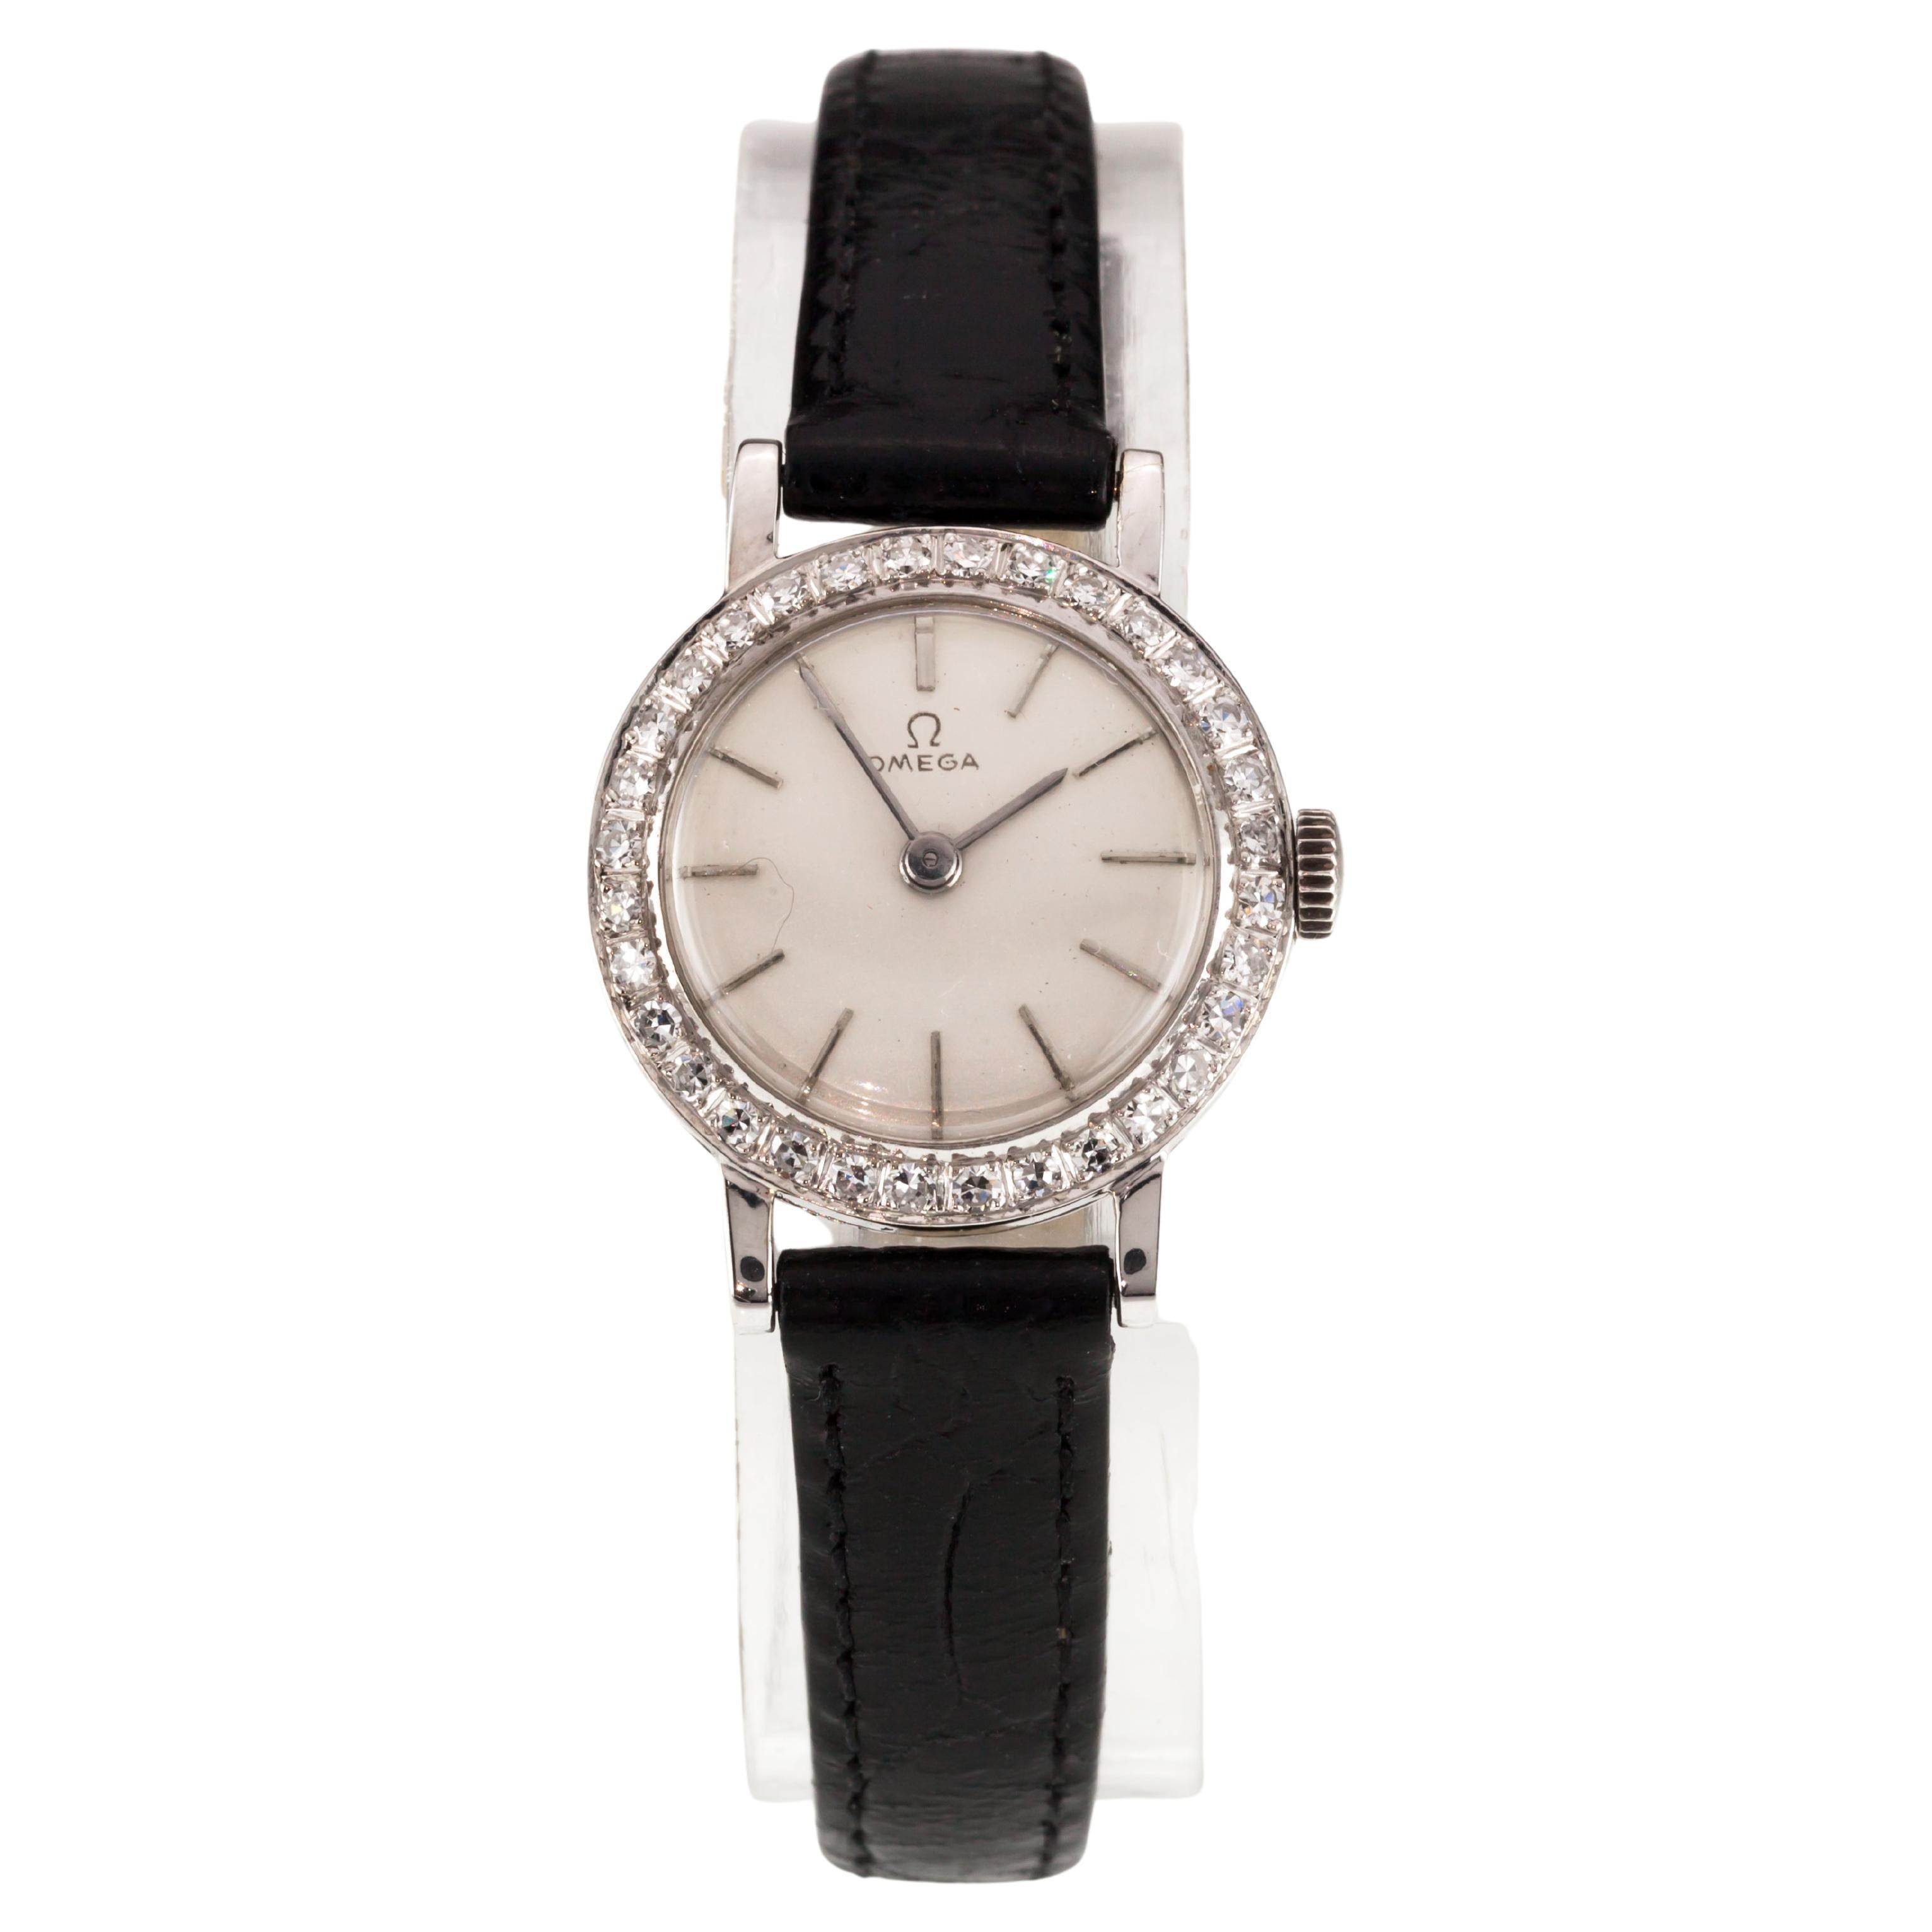 Omega 18k White Gold Women's Manual Wind Watch with Diamond Bezel #484 For Sale